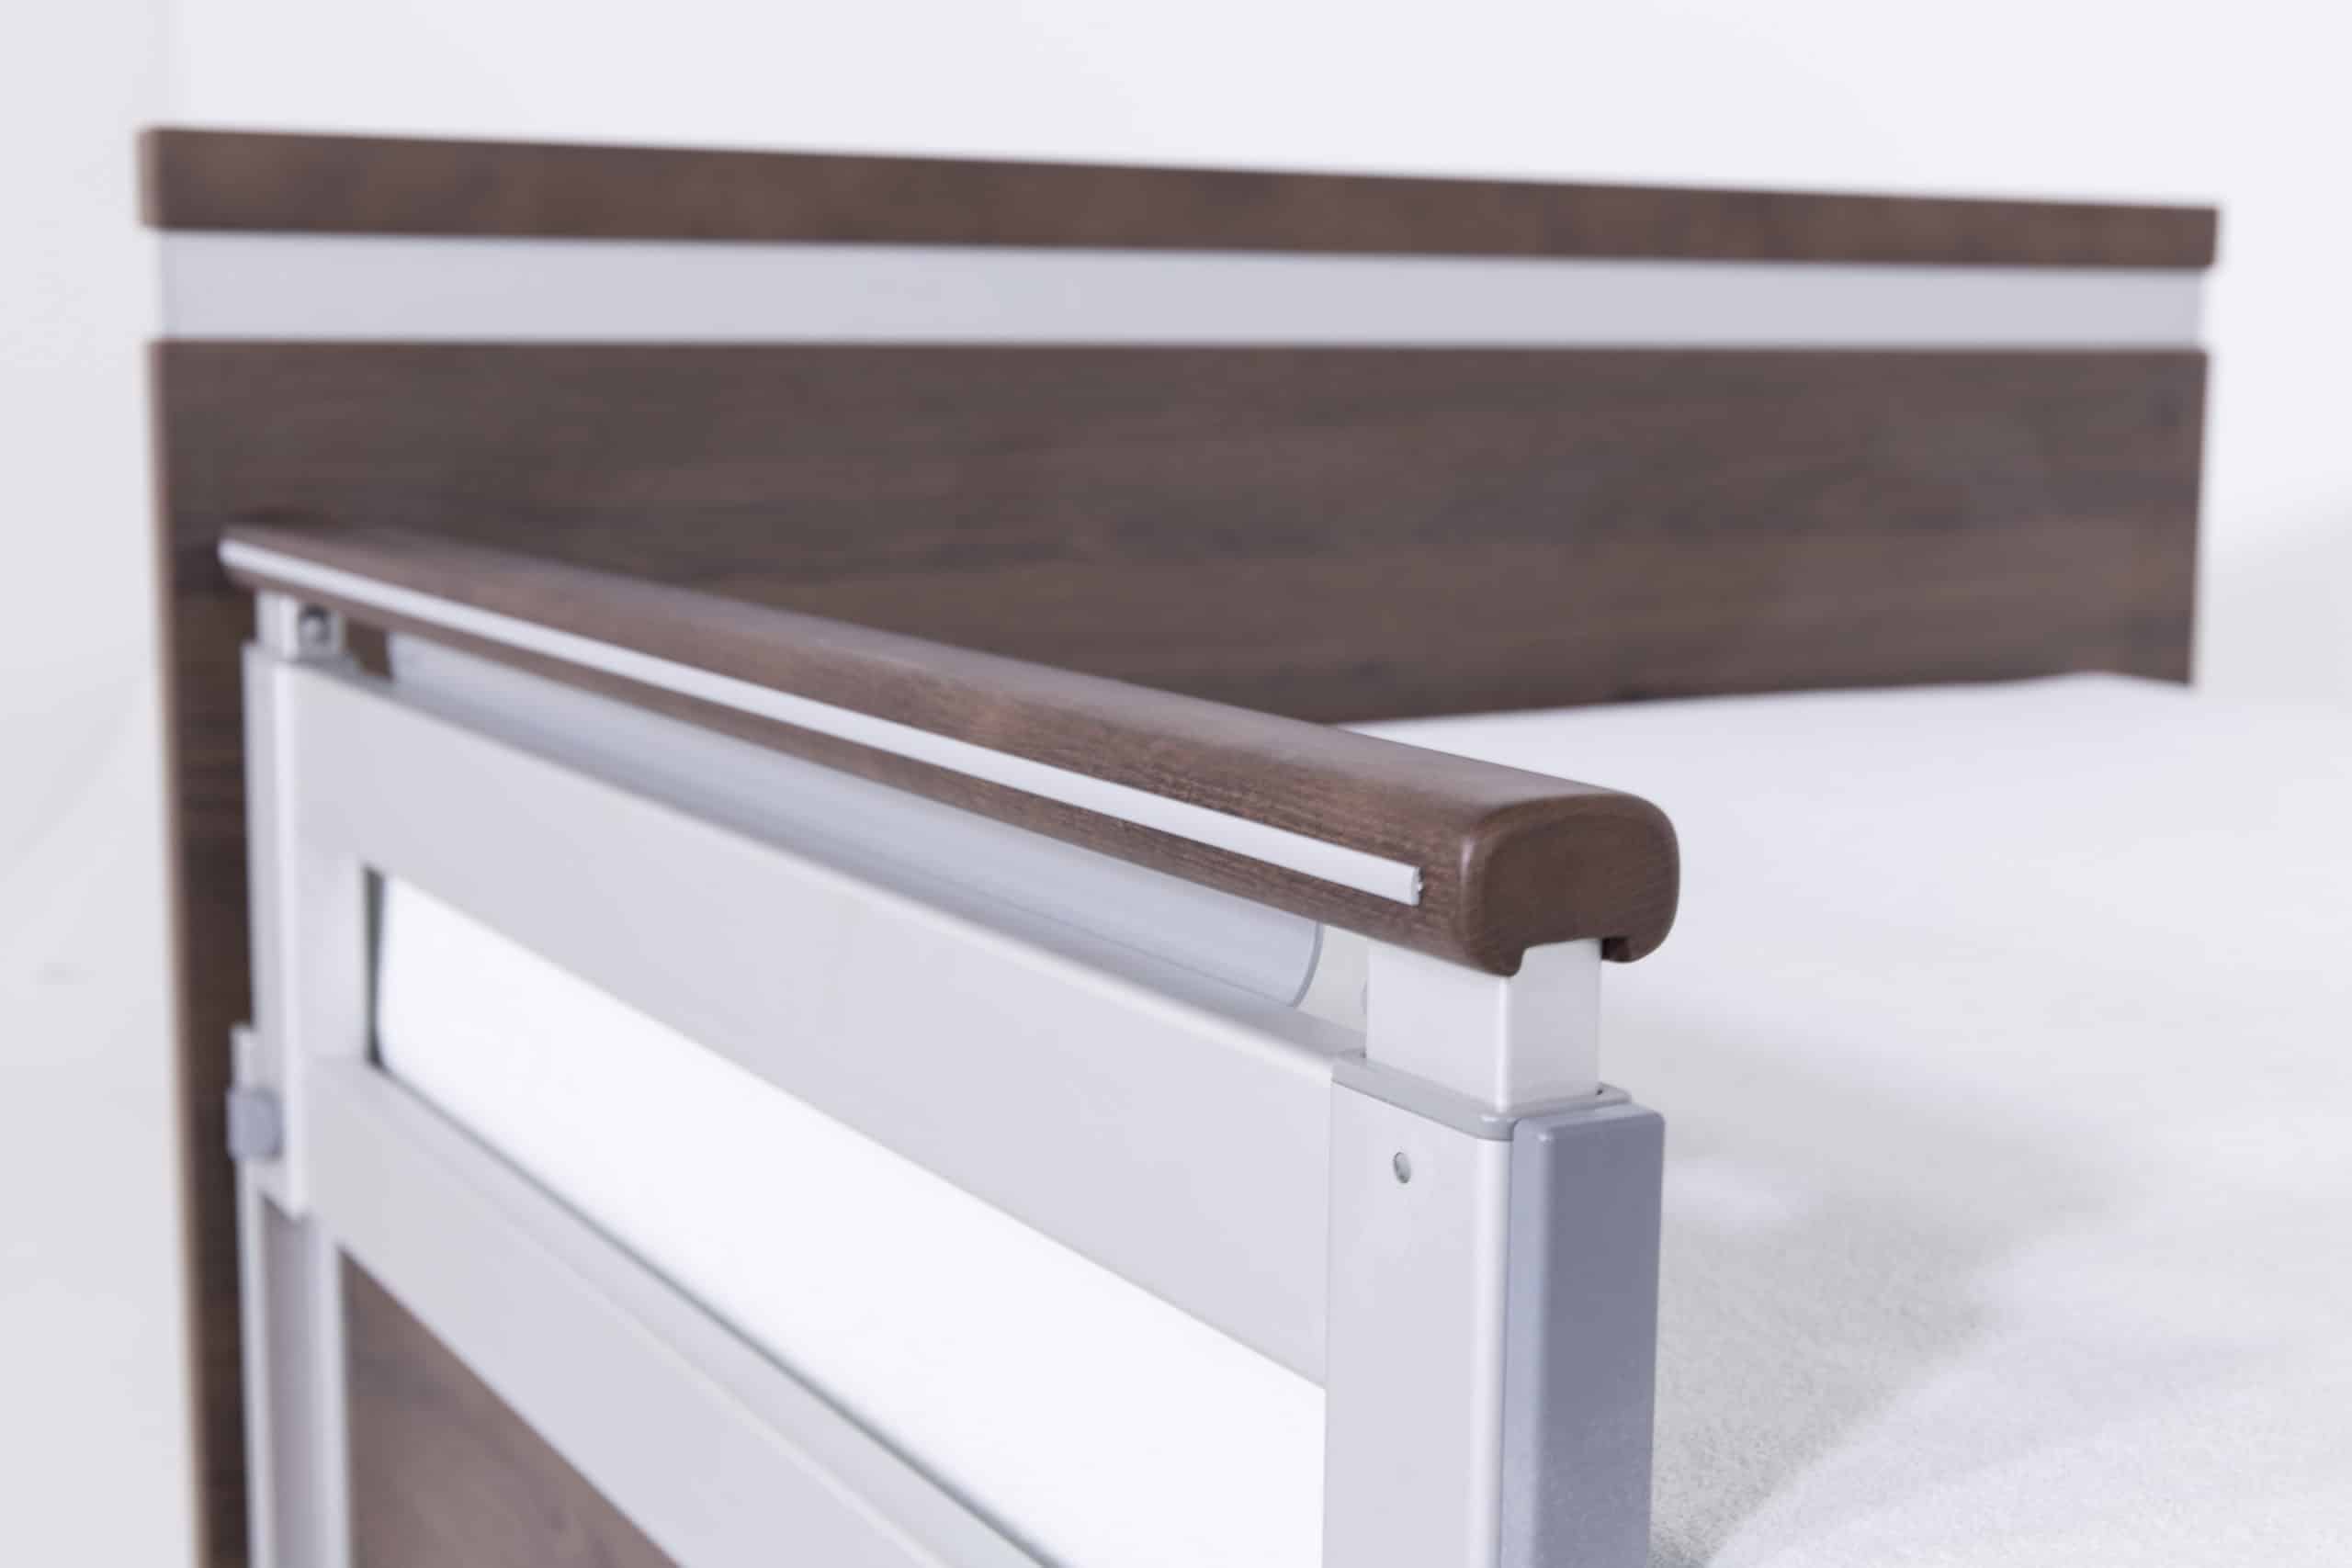 dream mattress SonderCare Aura™ Platinum Wide Hospital Bed – Wide Luxury Hospital Bed – Large Upholstered Hospital Bed